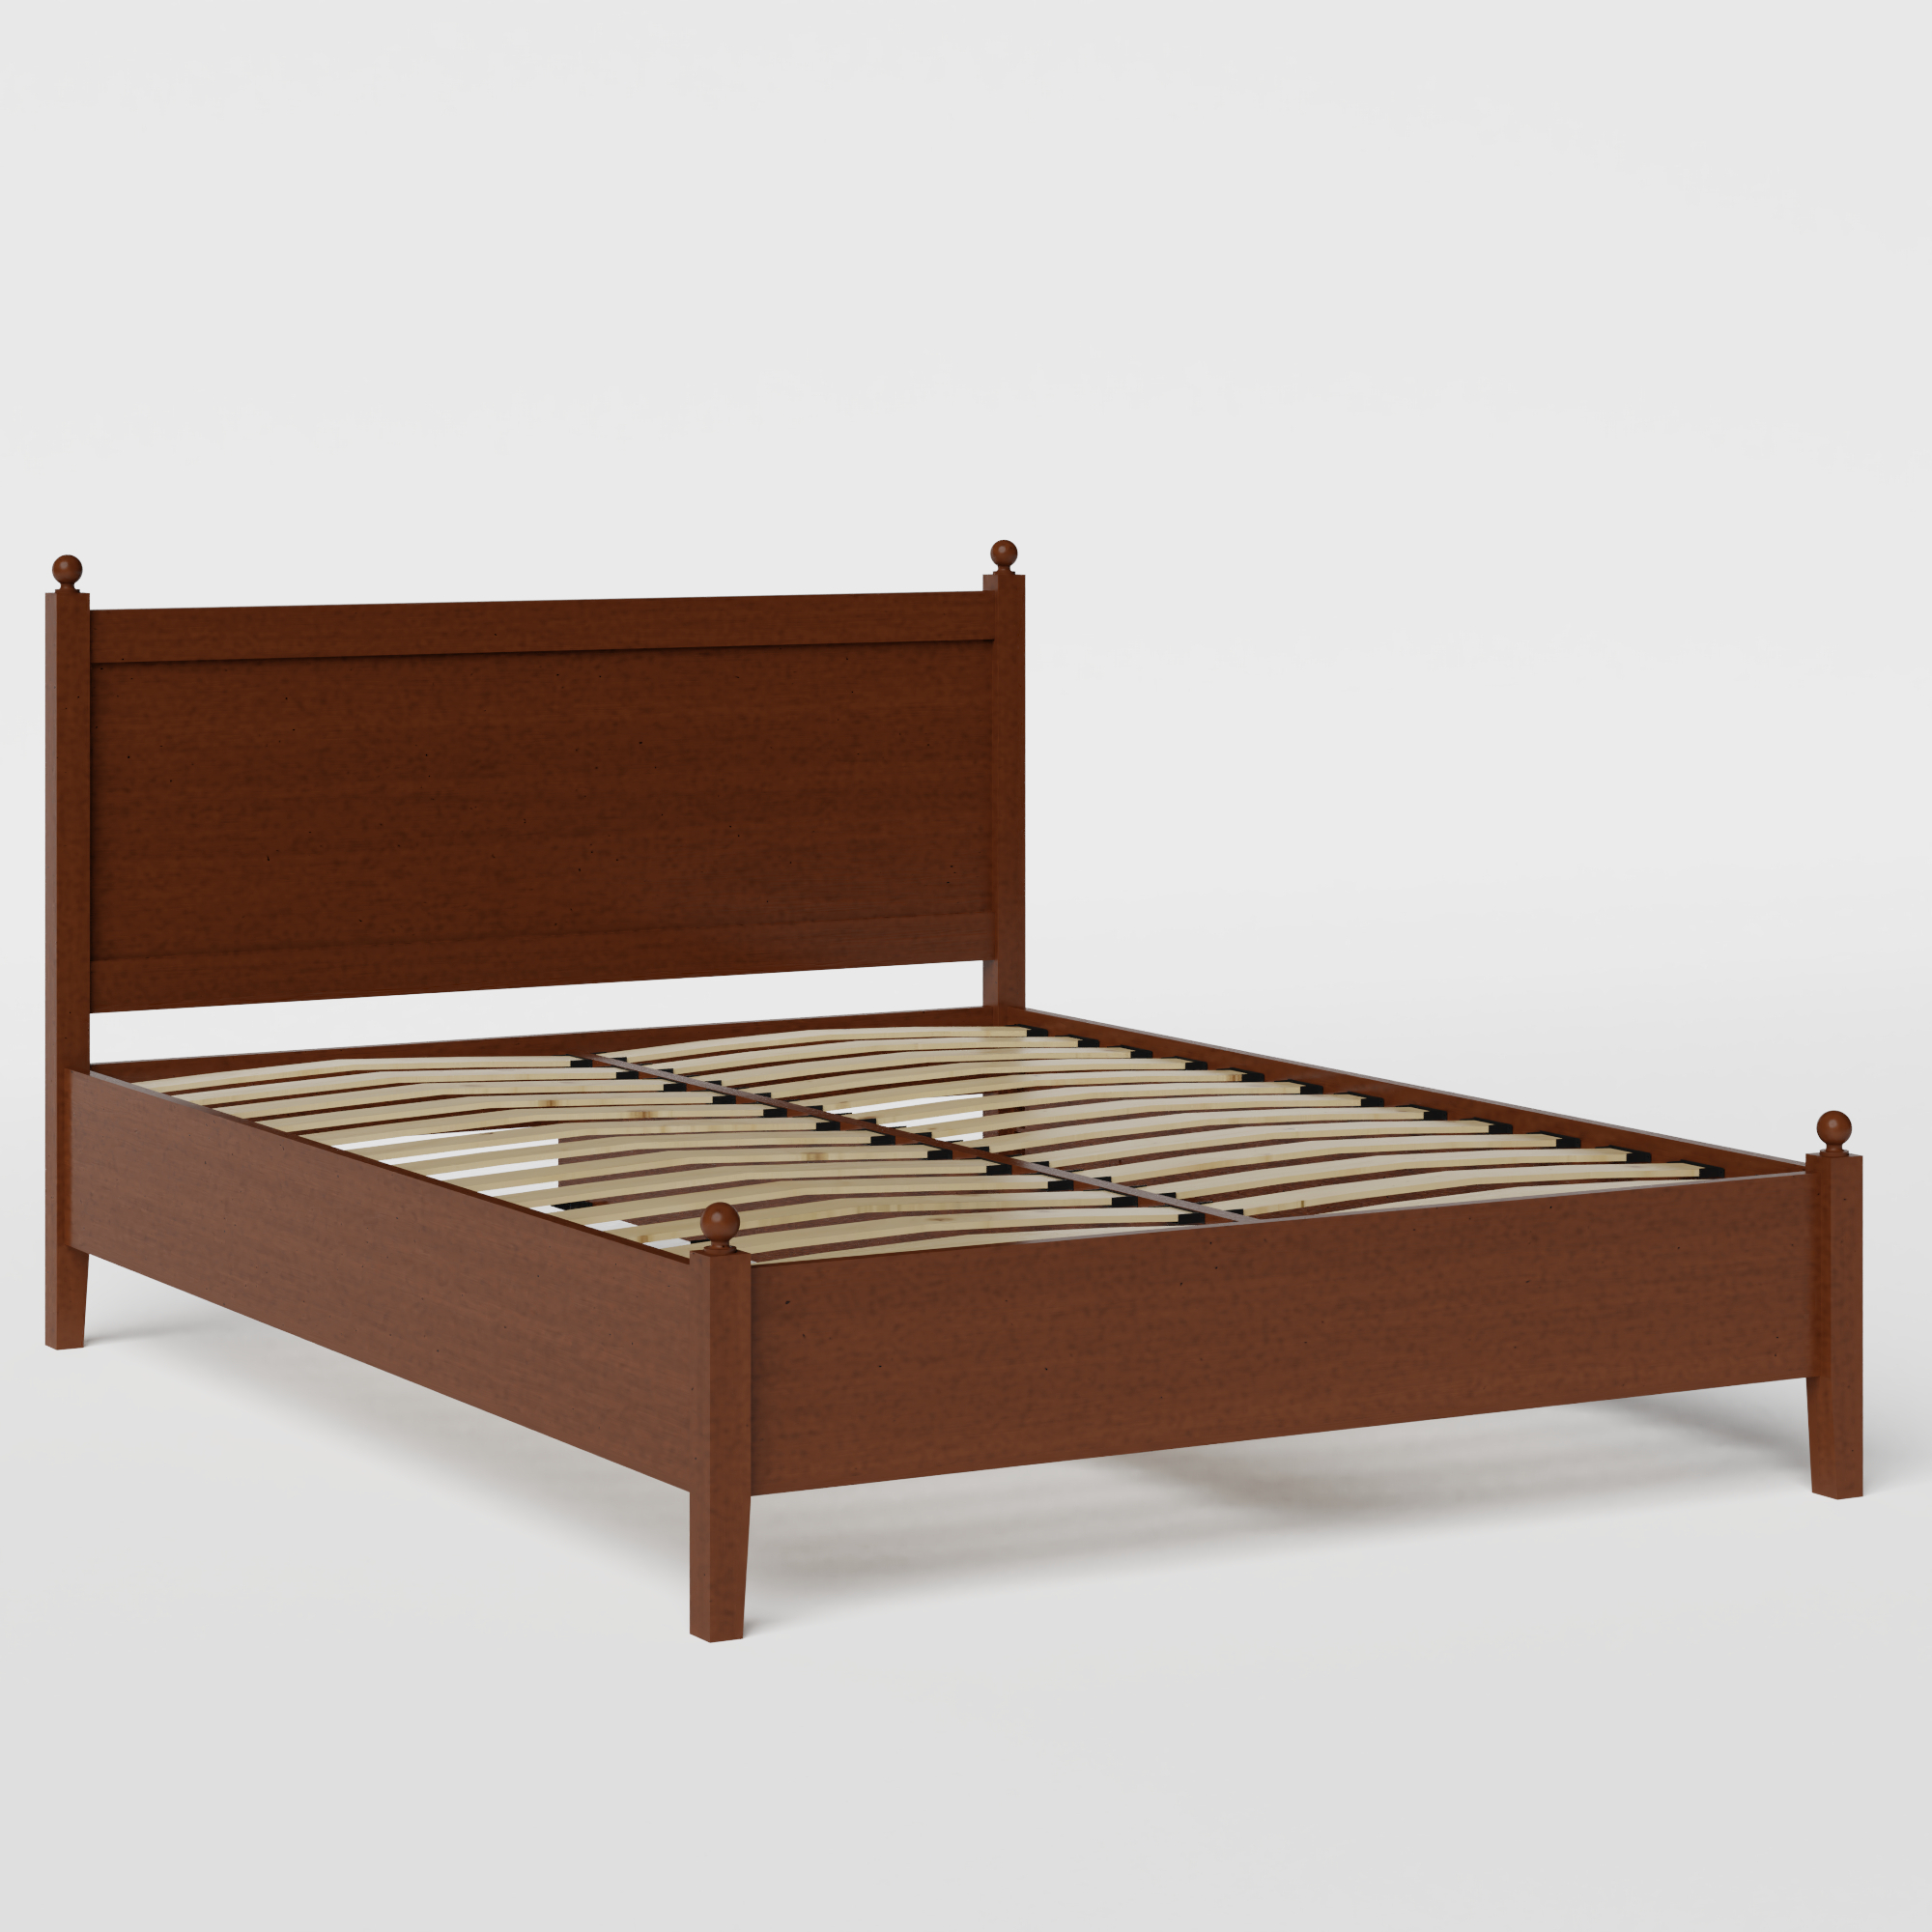 Marbella Low Footend houten bed in dark cherry